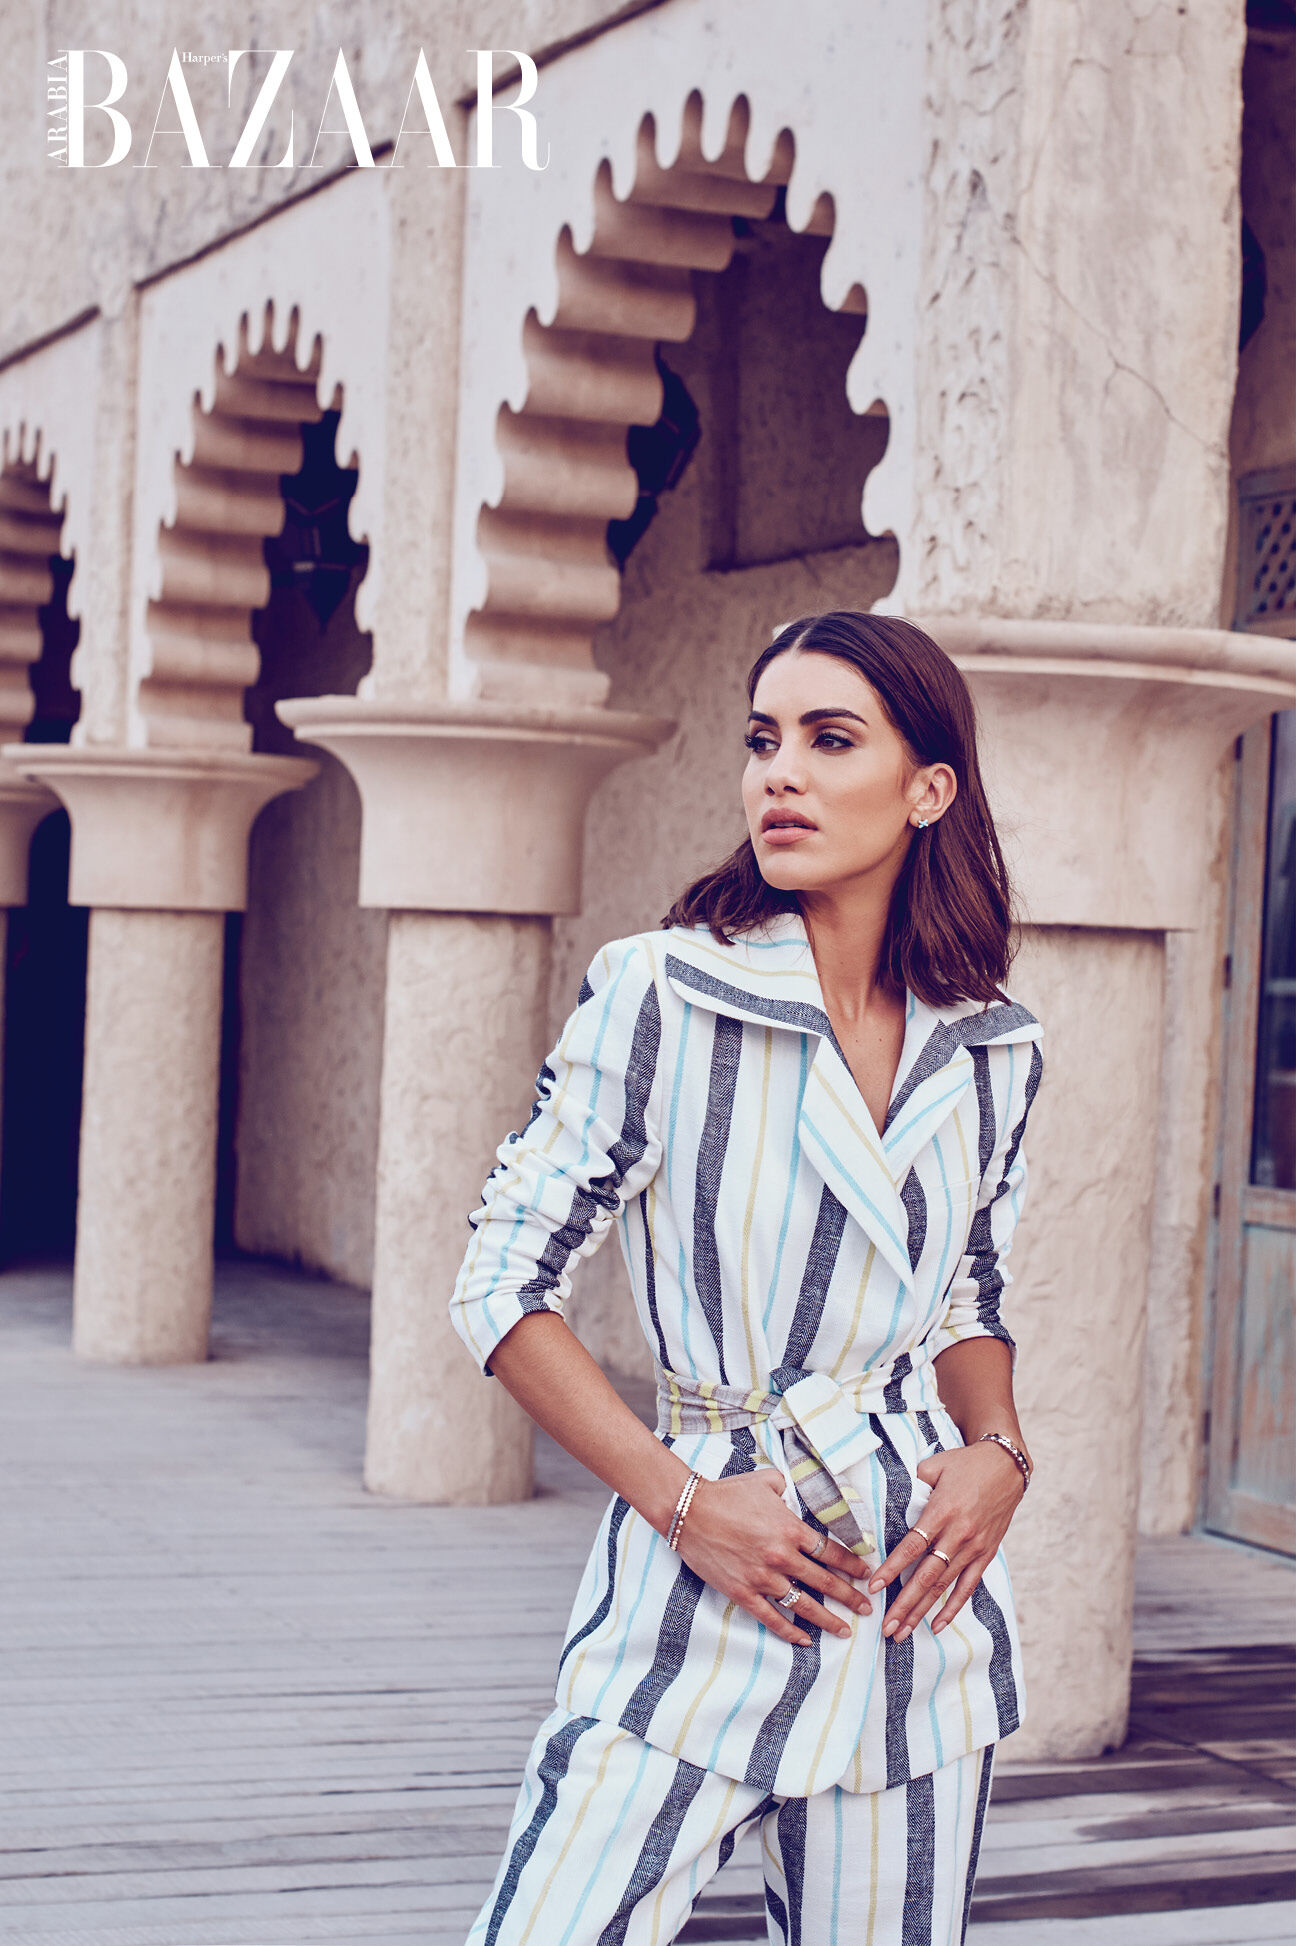 Camila Coelho, Kattan sisters to headline Beauty Pop in Dubai